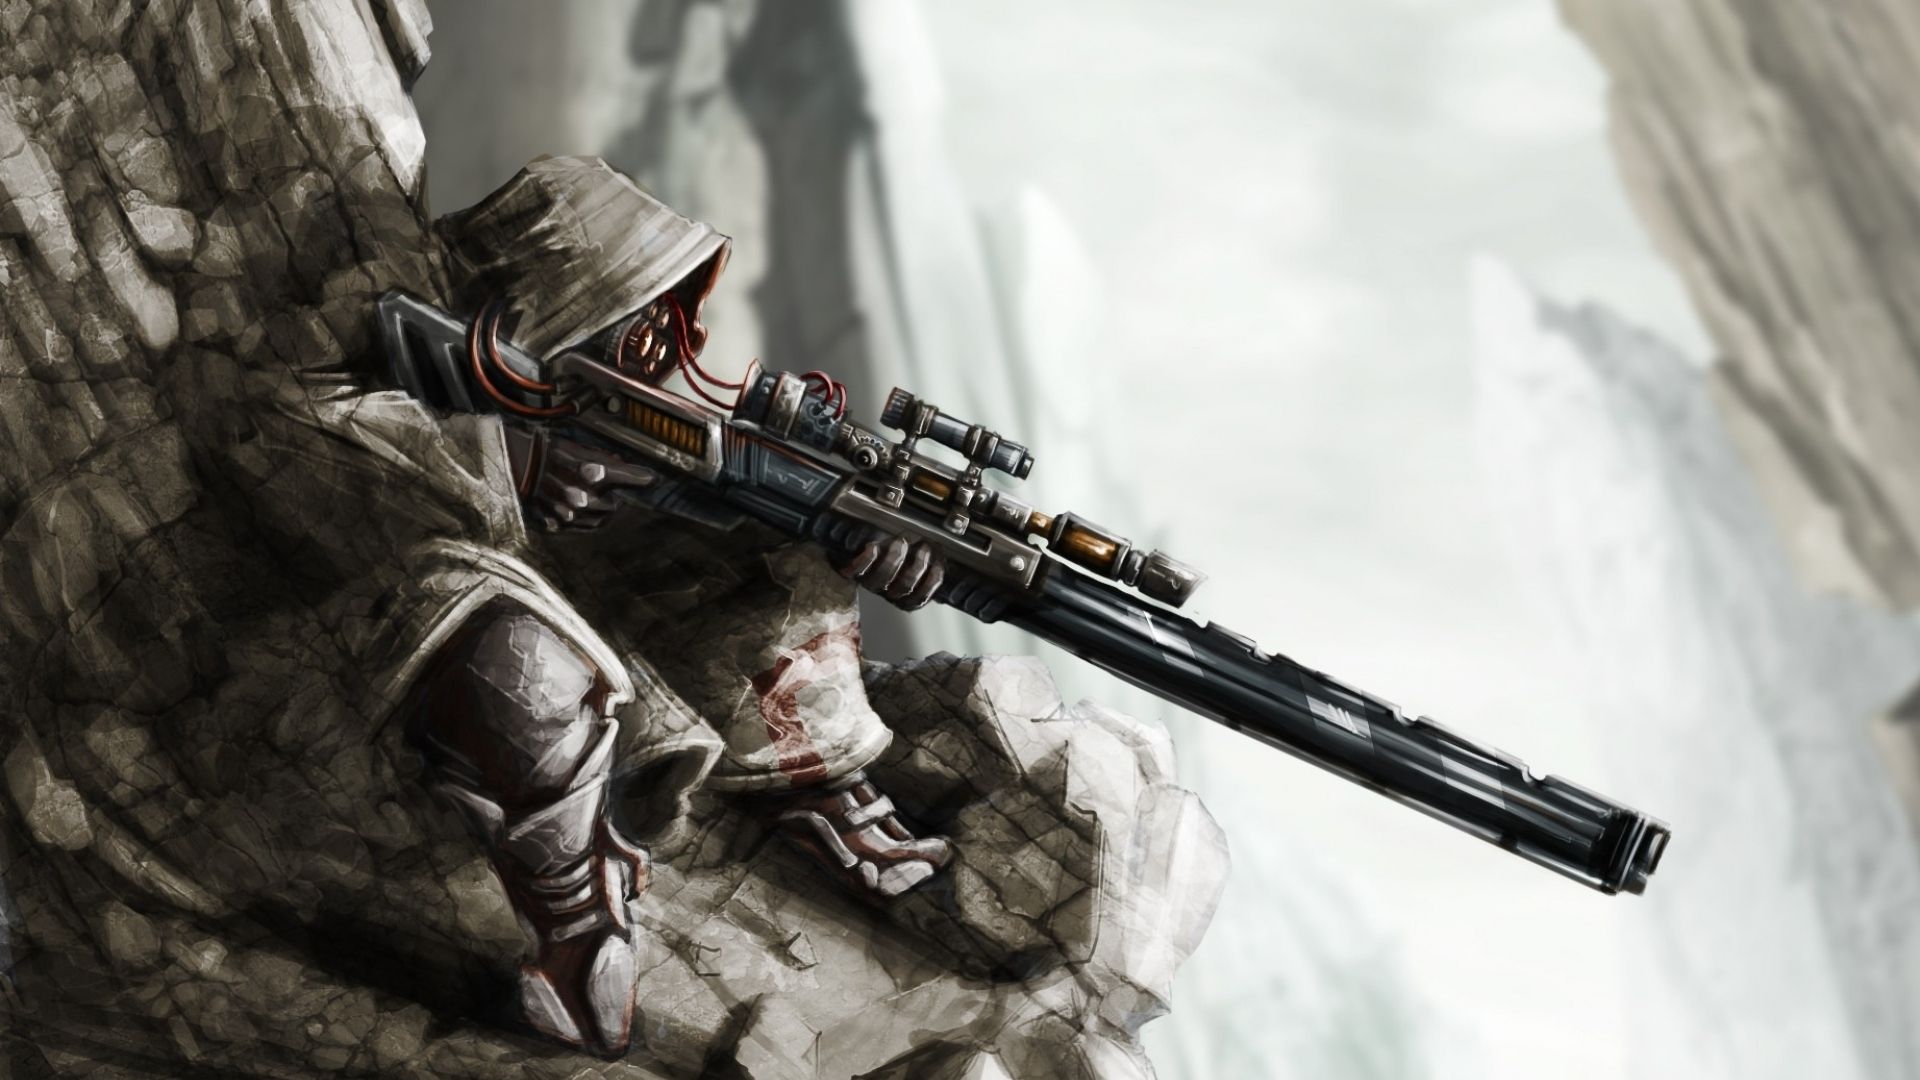 Free download Anime fantasy sniper warrior soldier weapons guns